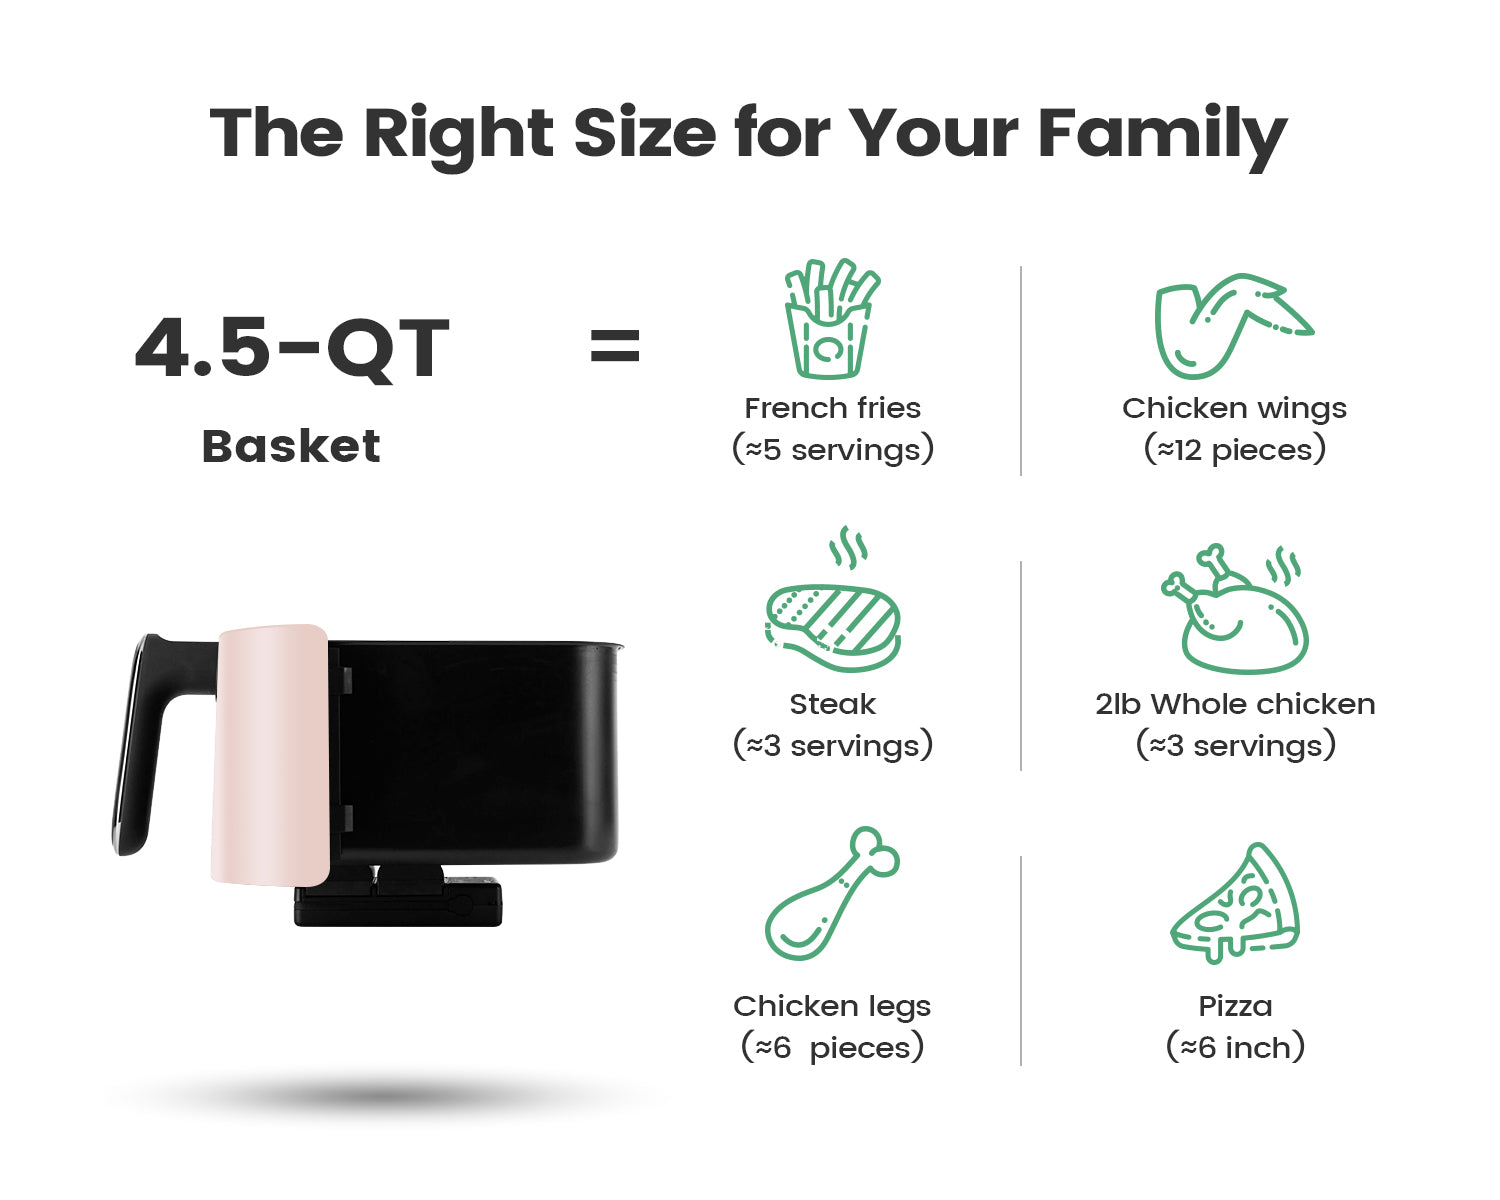 KOOC - Premium Pink Air Fryer, 4.5 Quart